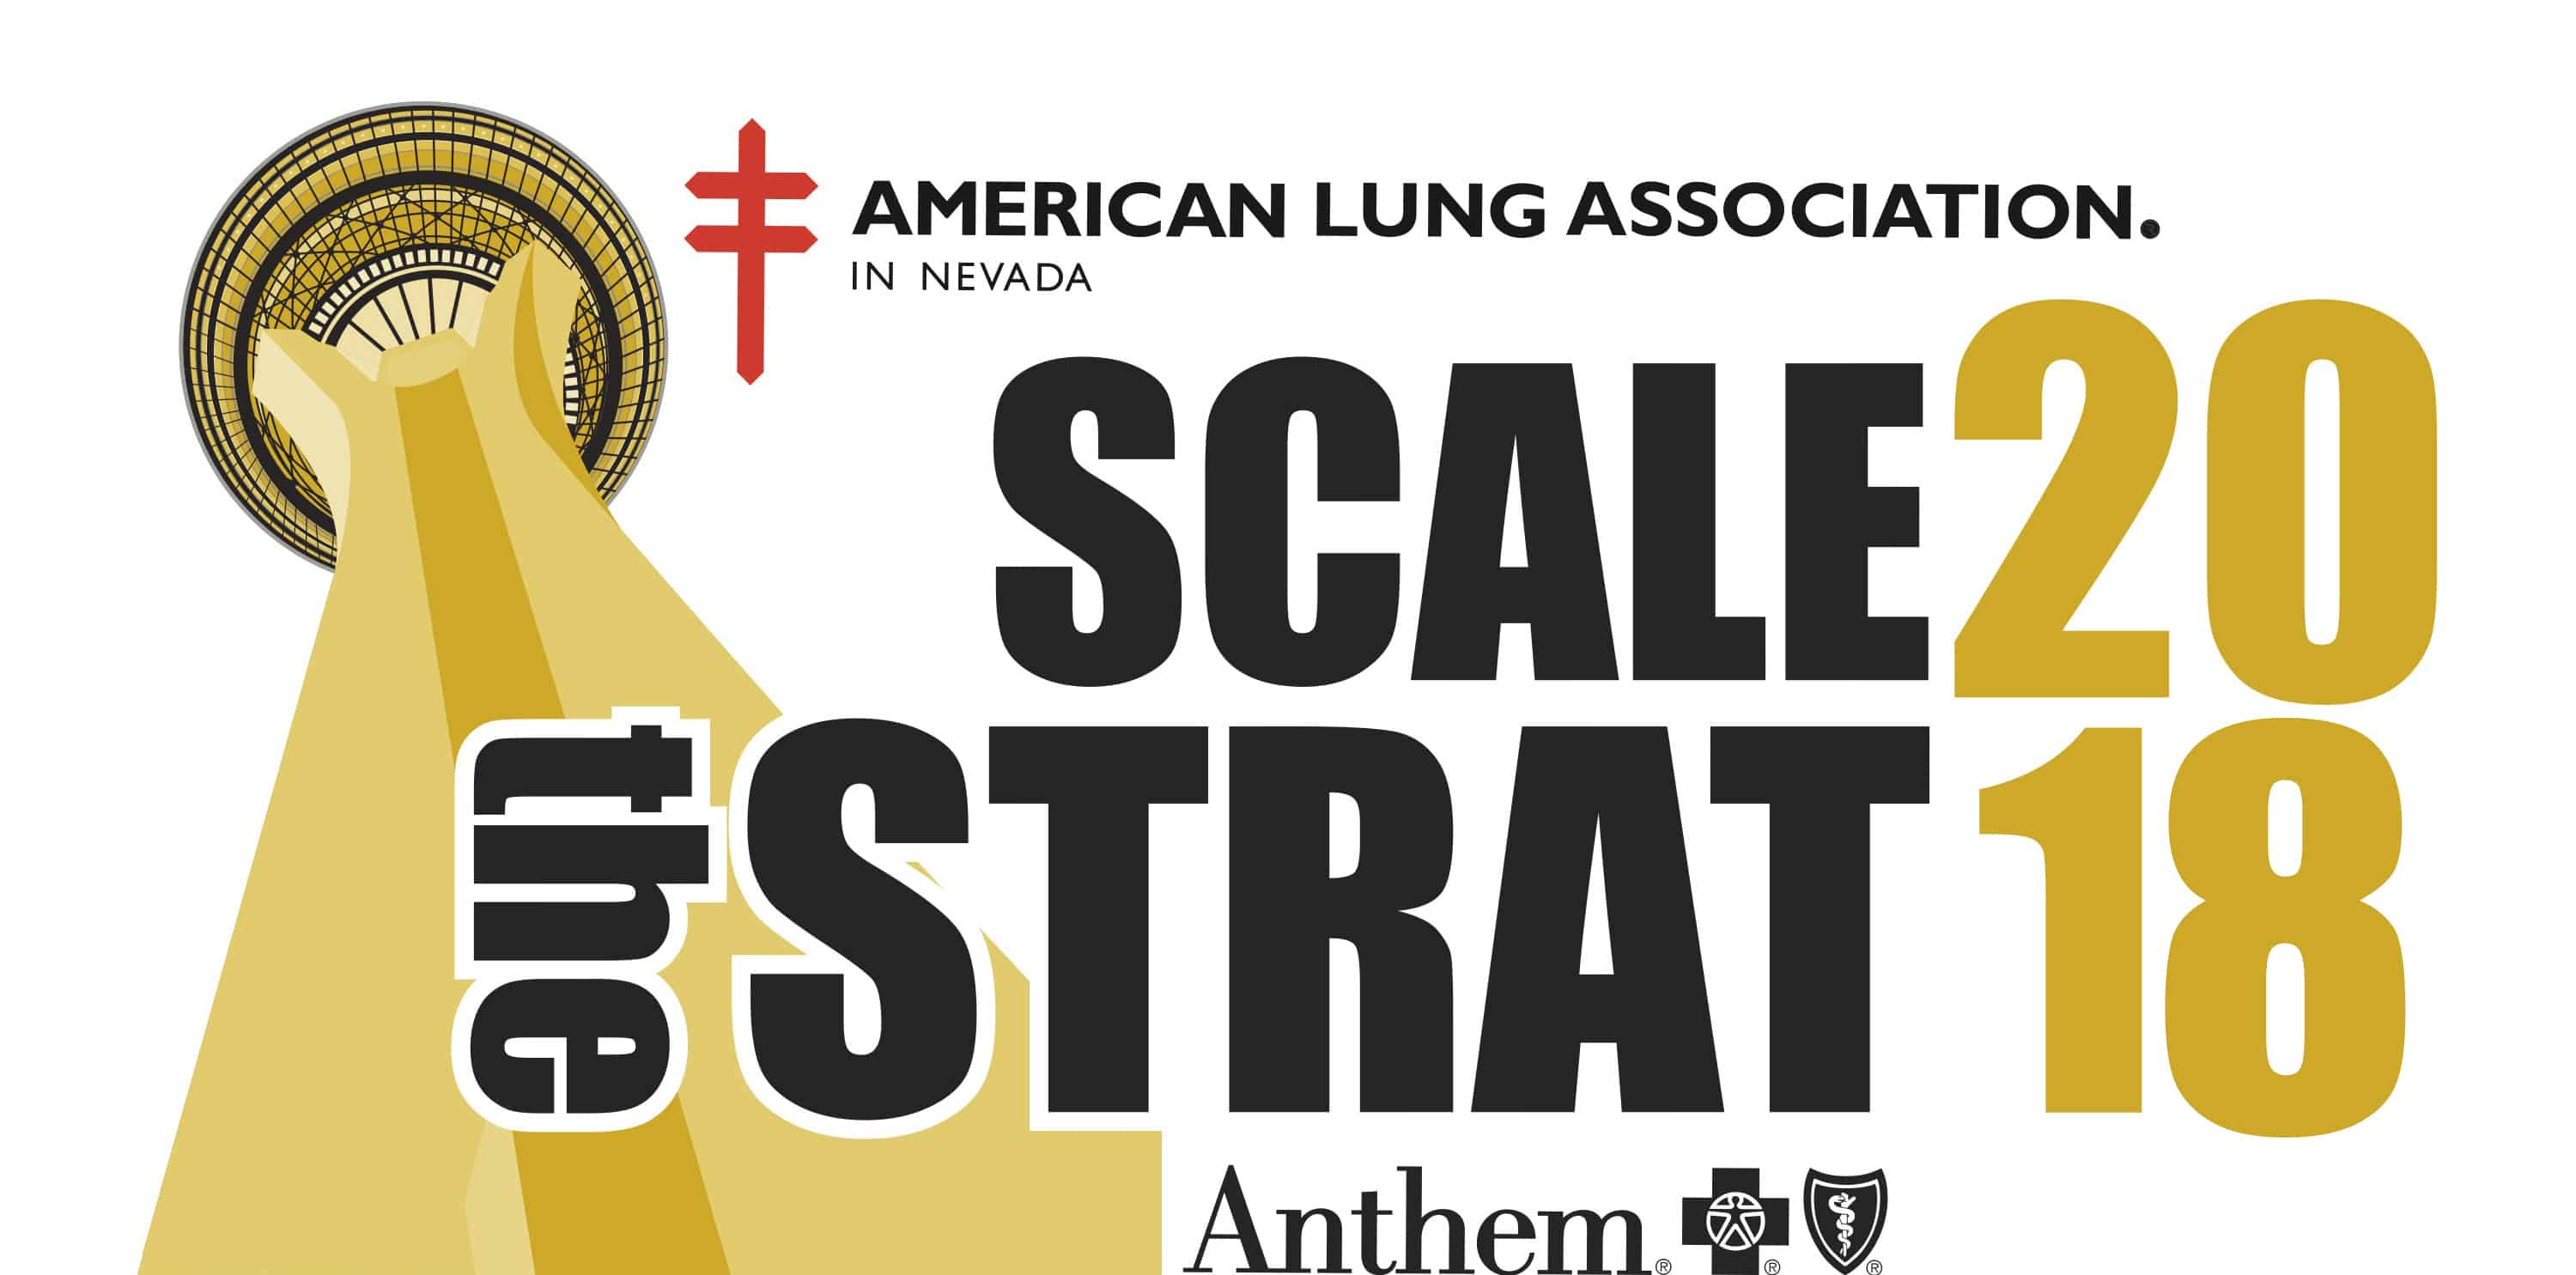 2017 Scale the Strat logo copy